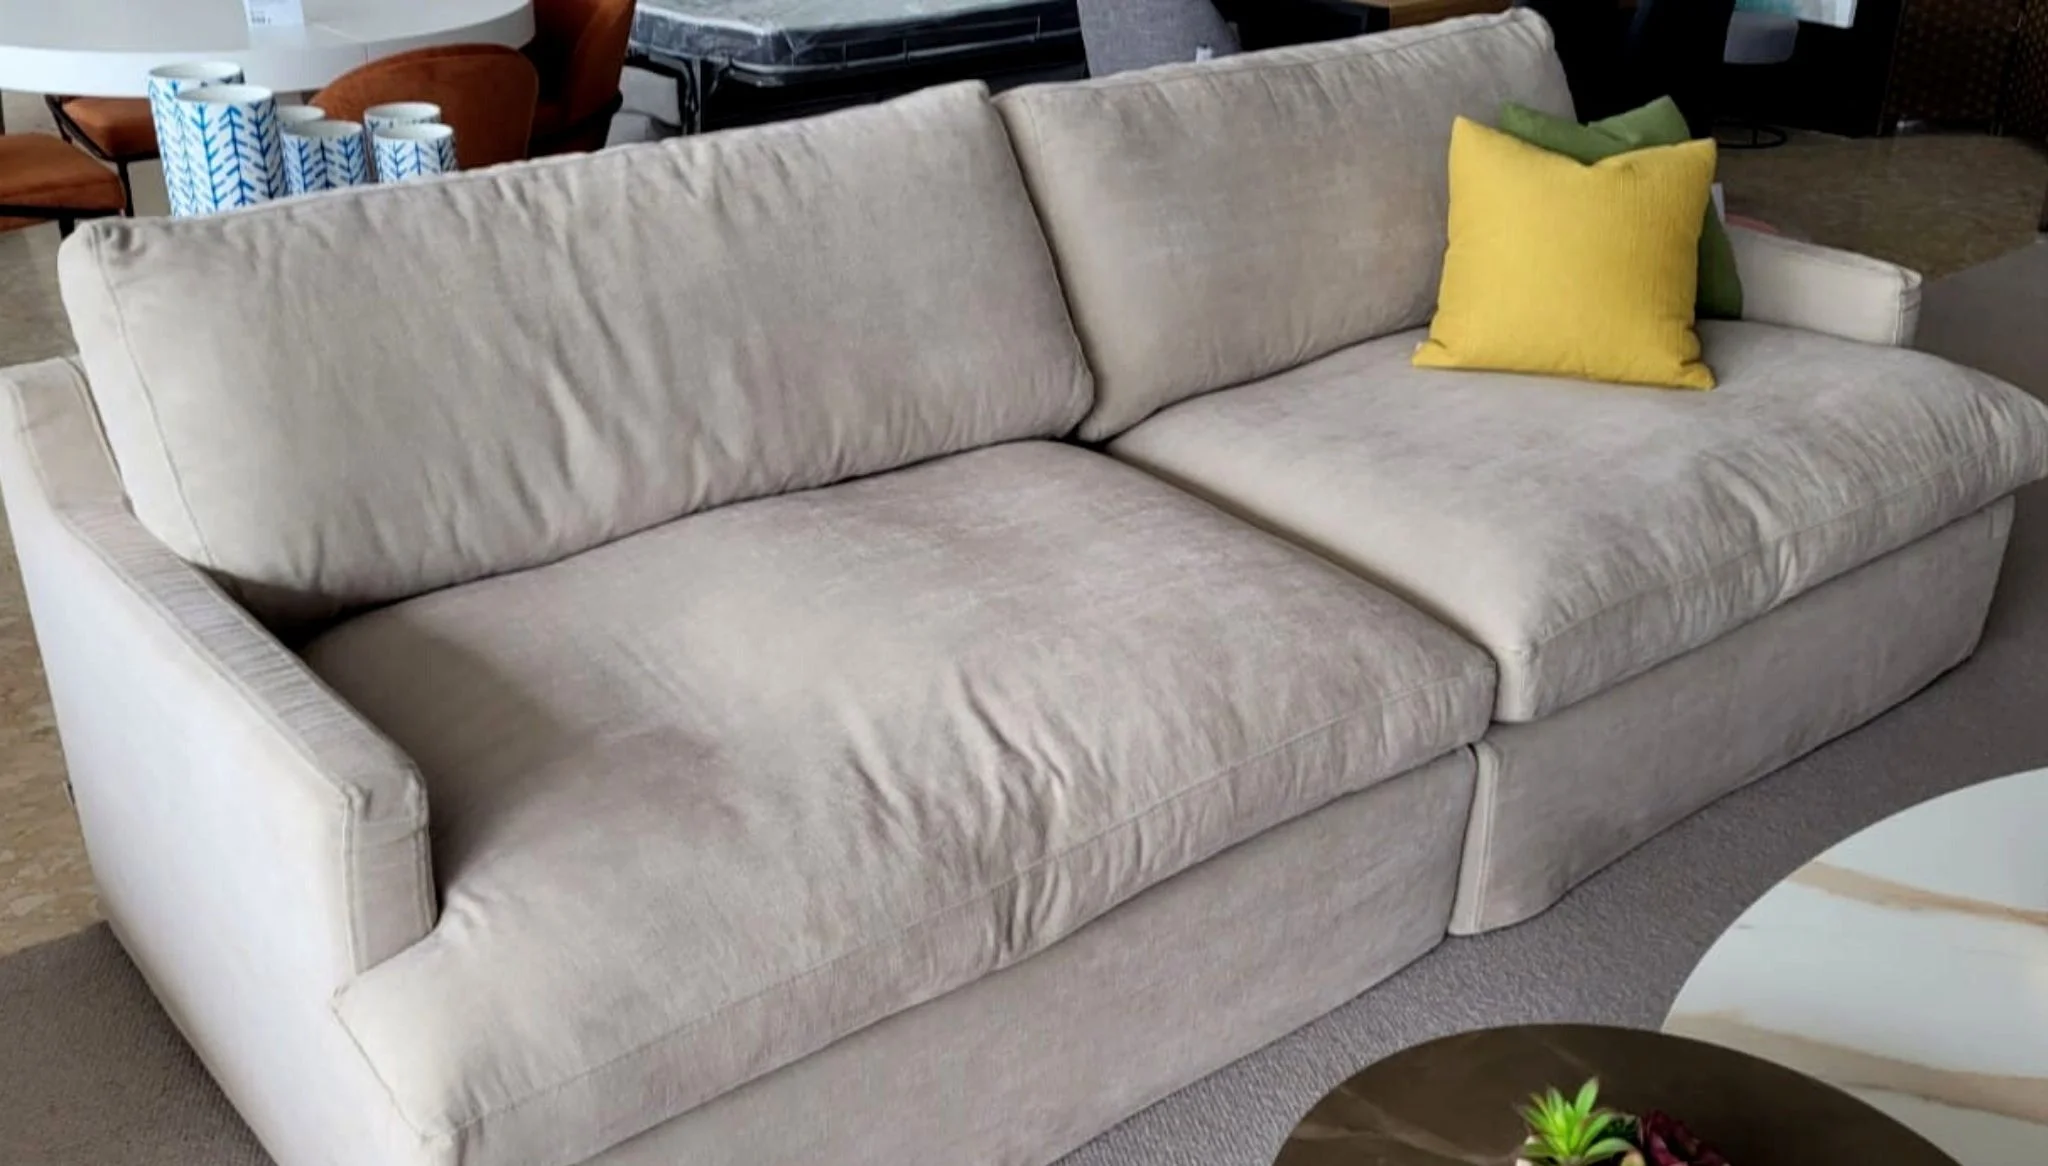 Encuentra tu sofá ideal en Housit